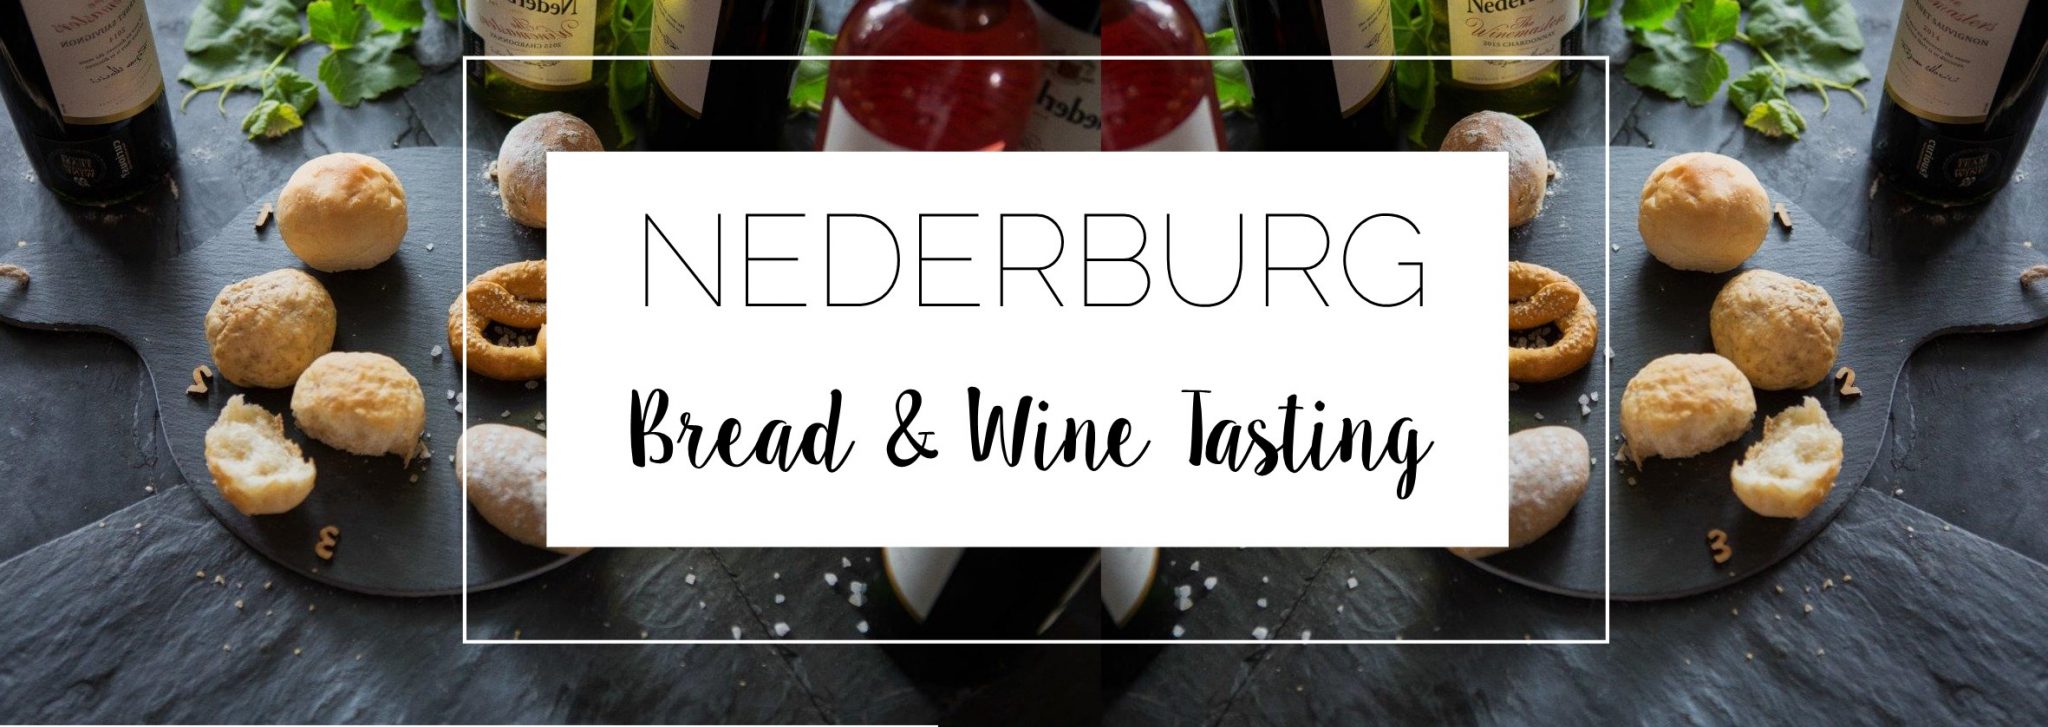 Wine Crush Wednesday: Nederberg's Proe Paarl new Bread & Wine Tasting 5